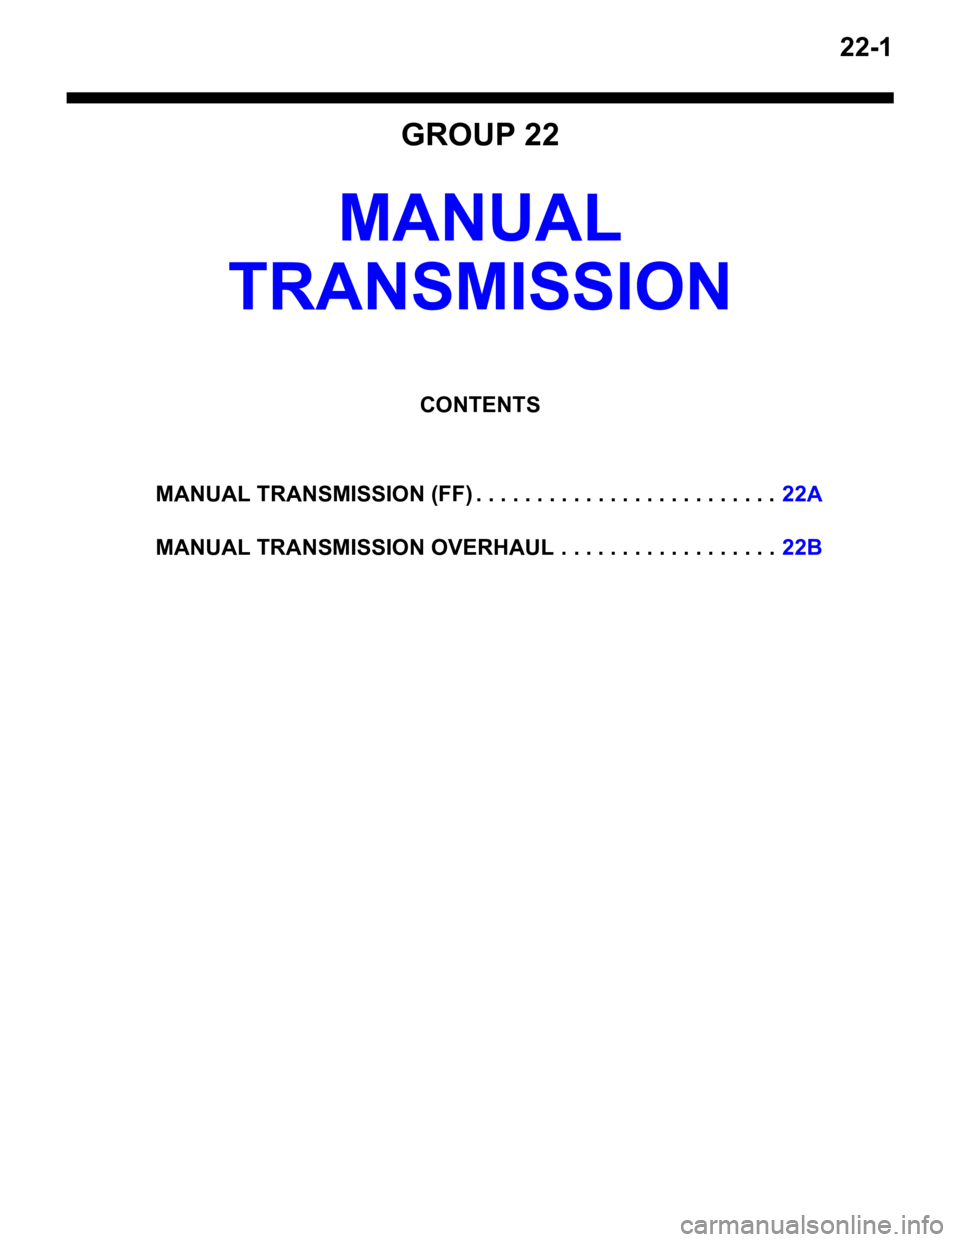 MITSUBISHI LANCER 2006  Workshop Manual 22-1
GROUP 22
MANUAL 
TRANSMISSION
CONTENTS
MANUAL TRANSMISSION (FF) . . . . . . . . . . . . . . . . . . . . . . . . .22A
MANUAL TRANSMISSION OVERHAUL .  . . . . . . . . . . . . . . . . .22B 